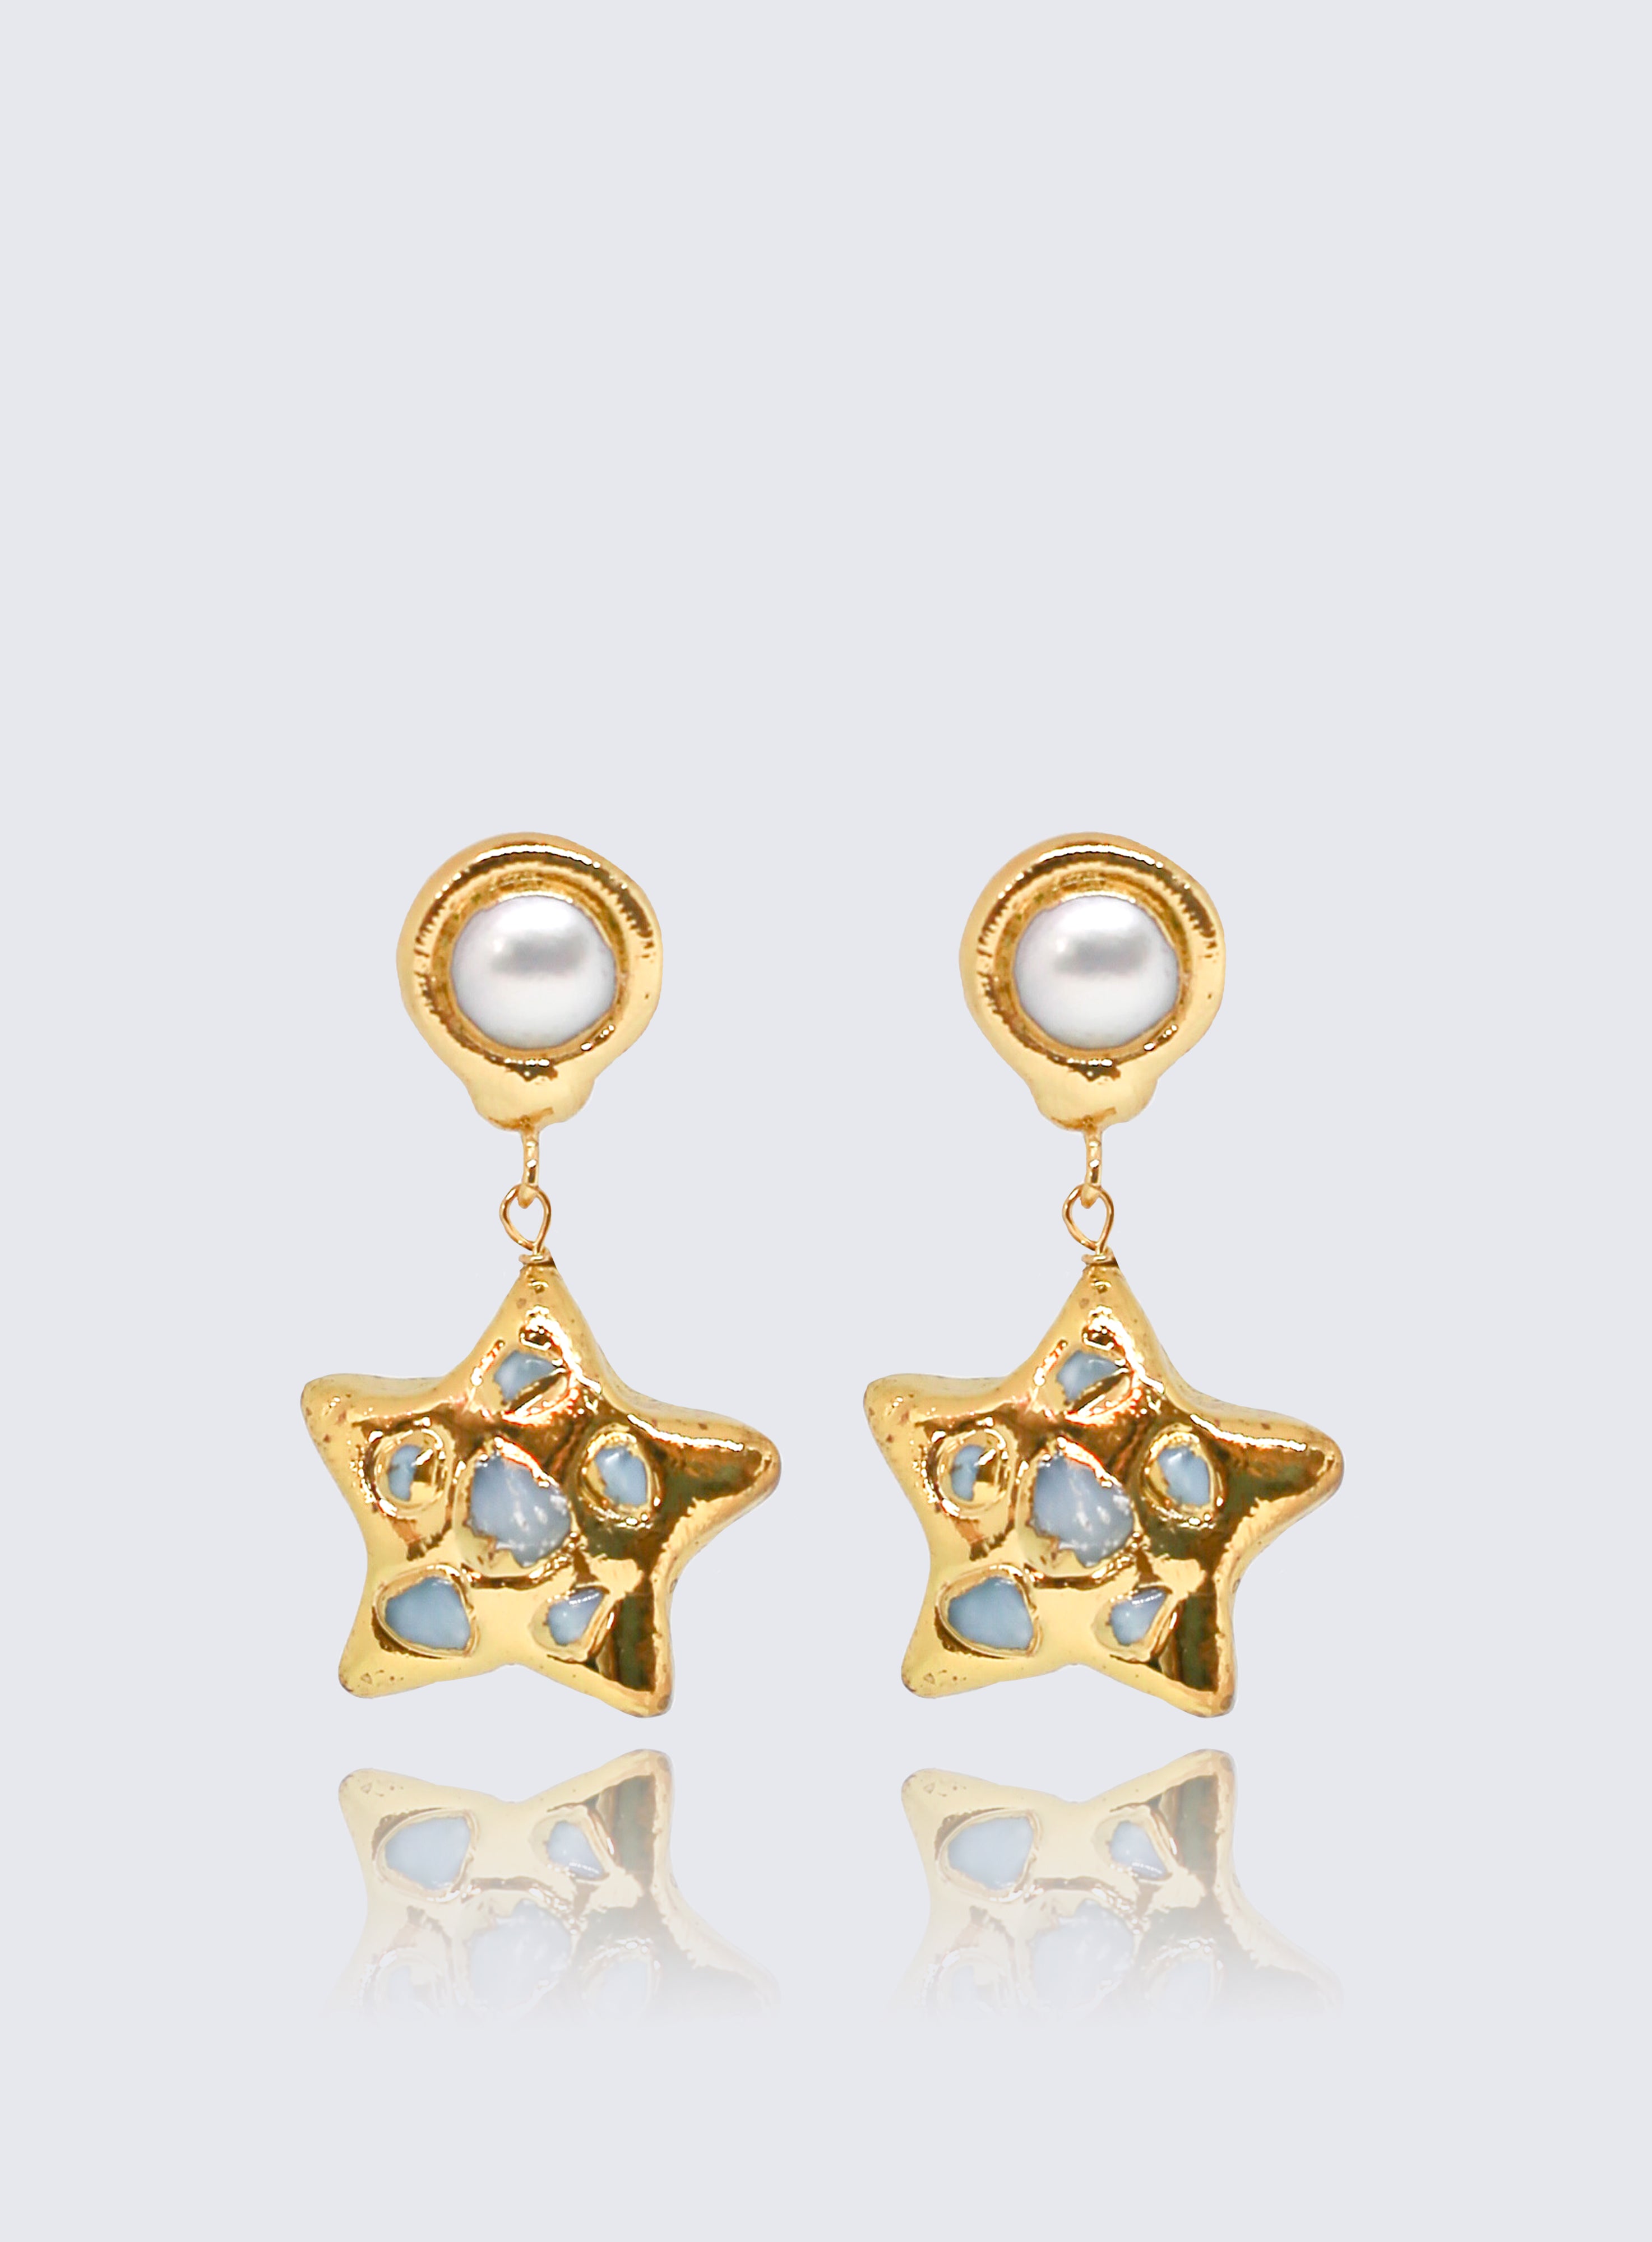 Madonna earrings